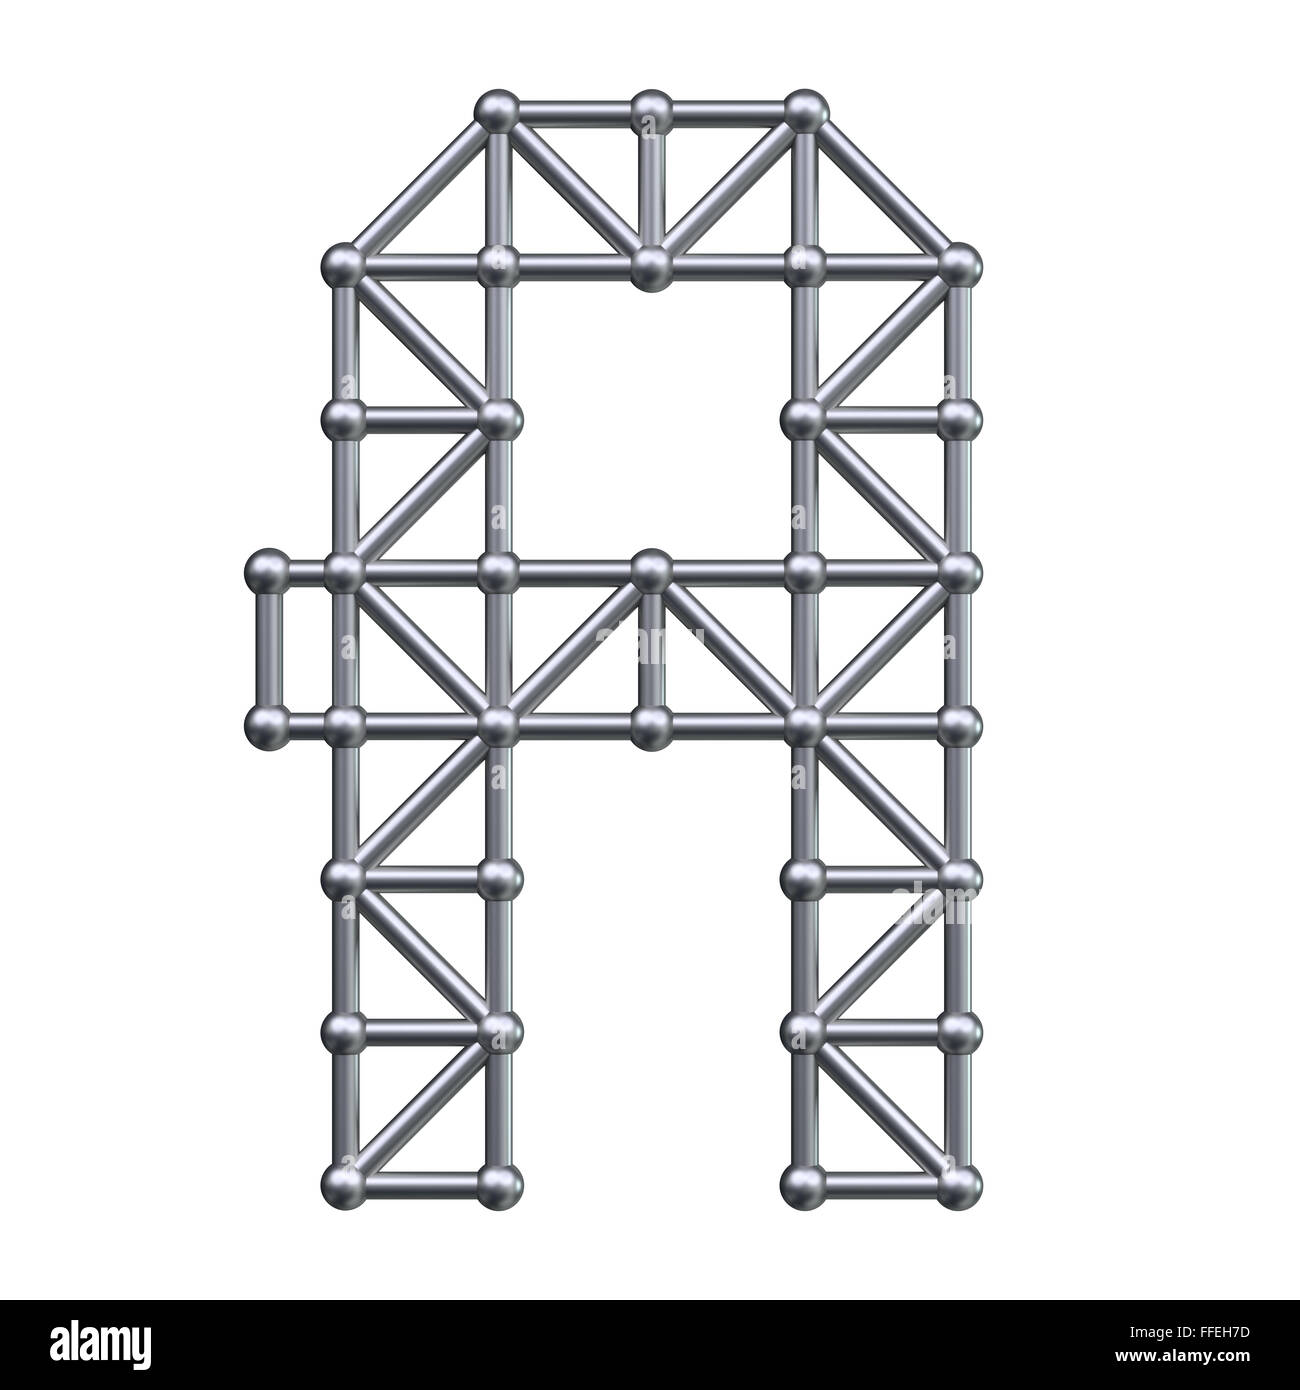 Metal structure alphabet letter A. 3D render. Stock Photo